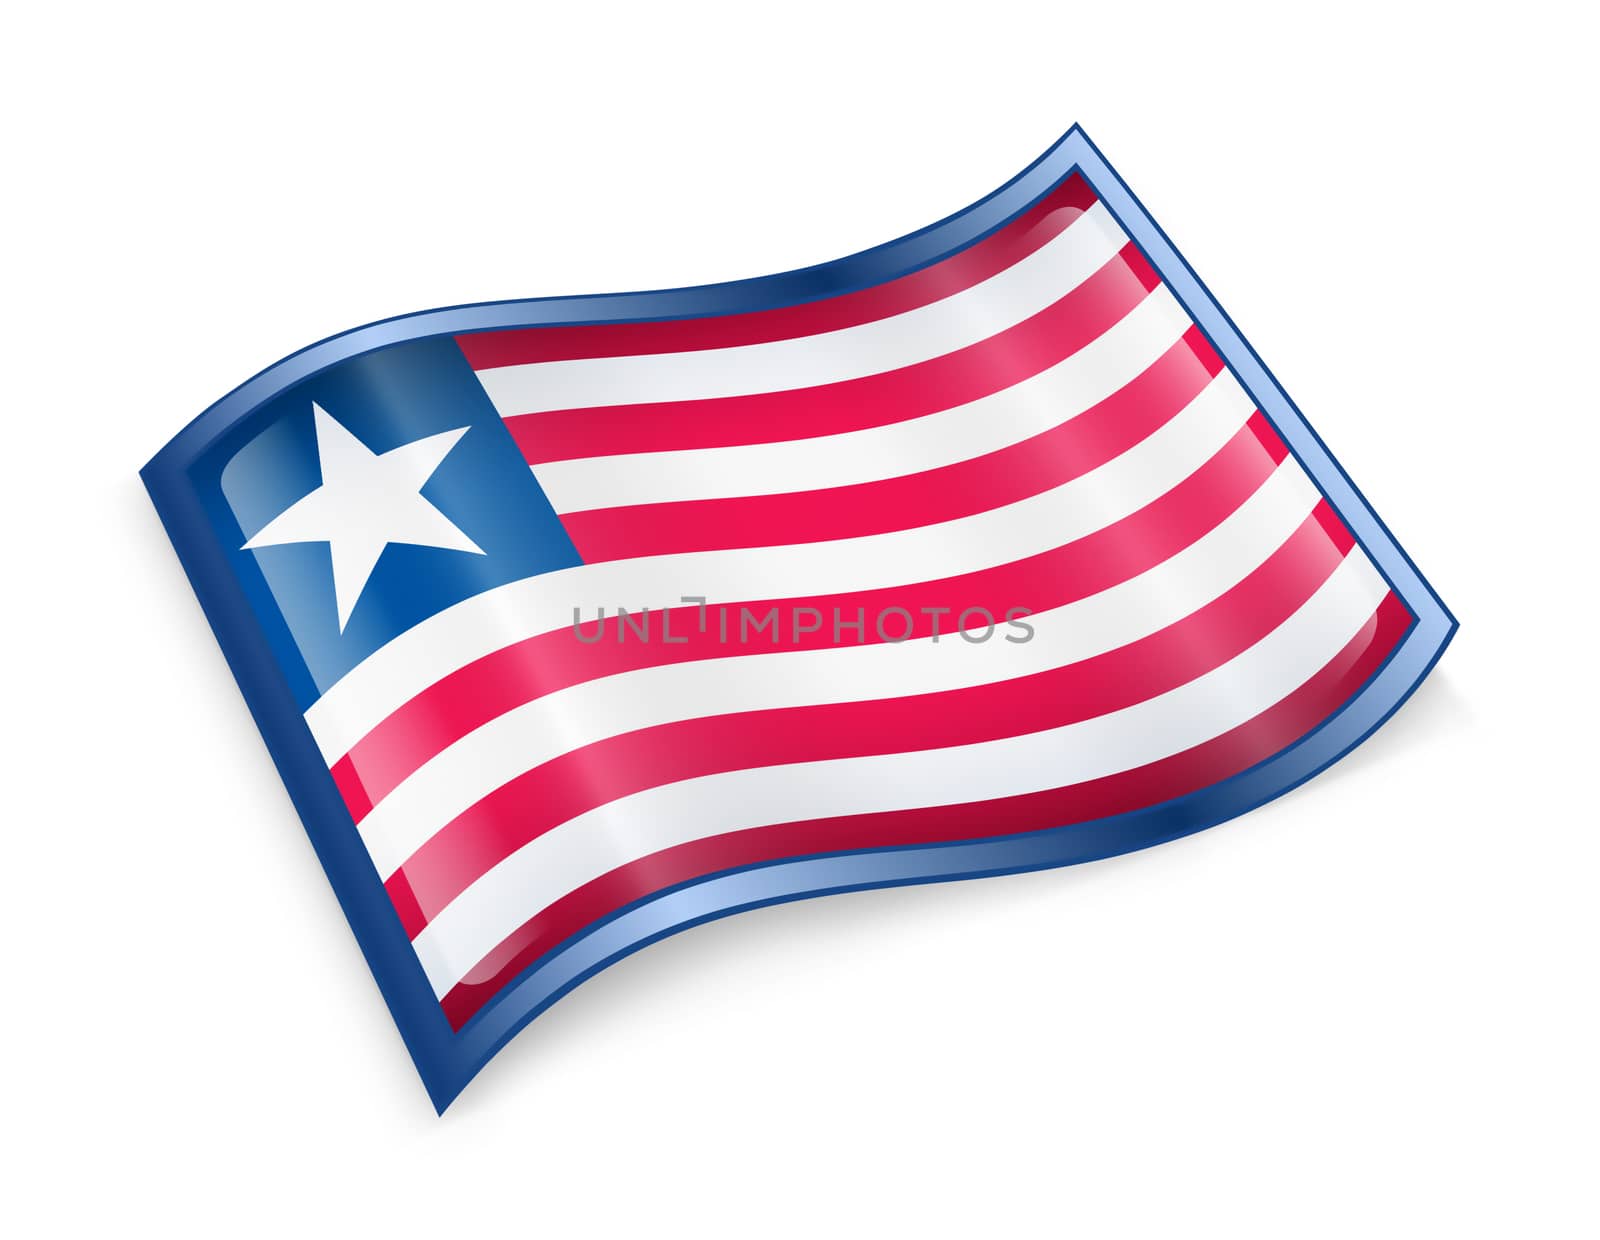 Liberian Flag icon, isolated on white background